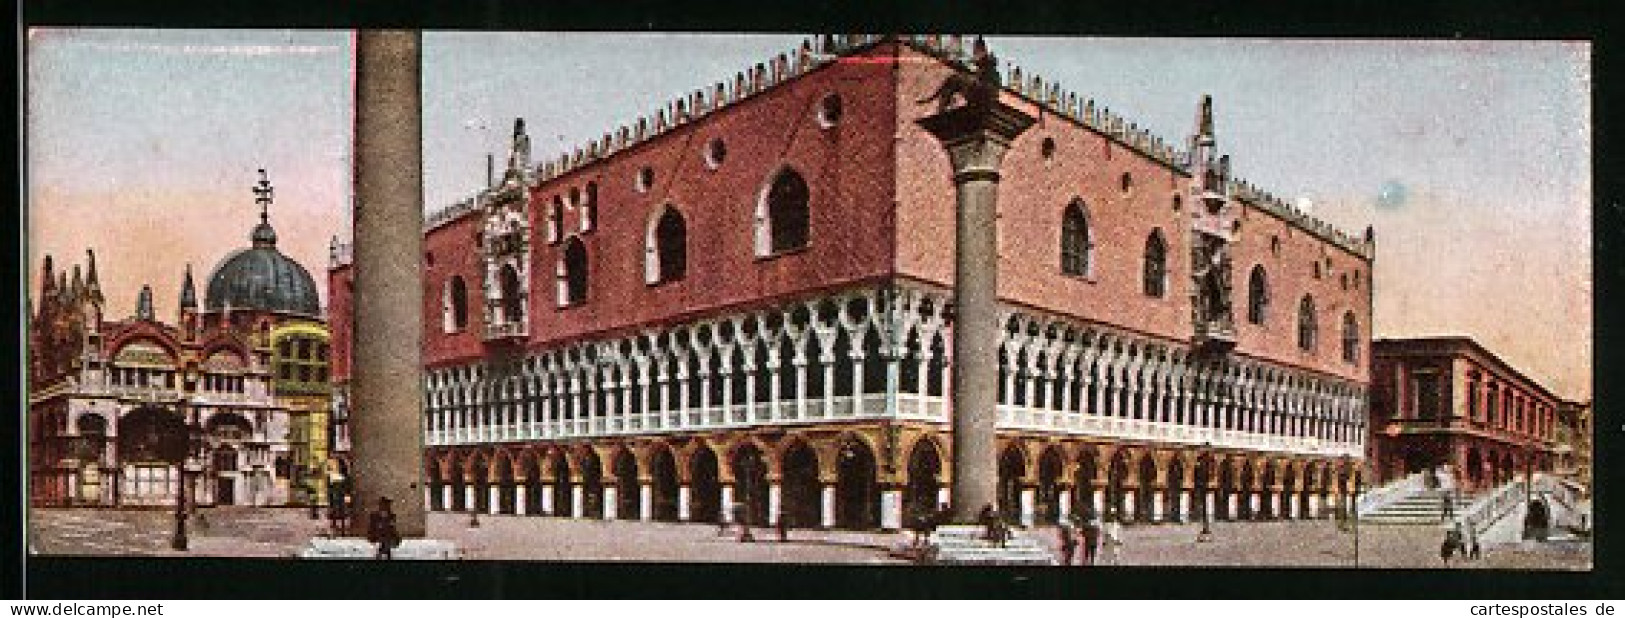 Mini-Cartolina Venezia, Palazzo Ducale  - Venezia (Venice)